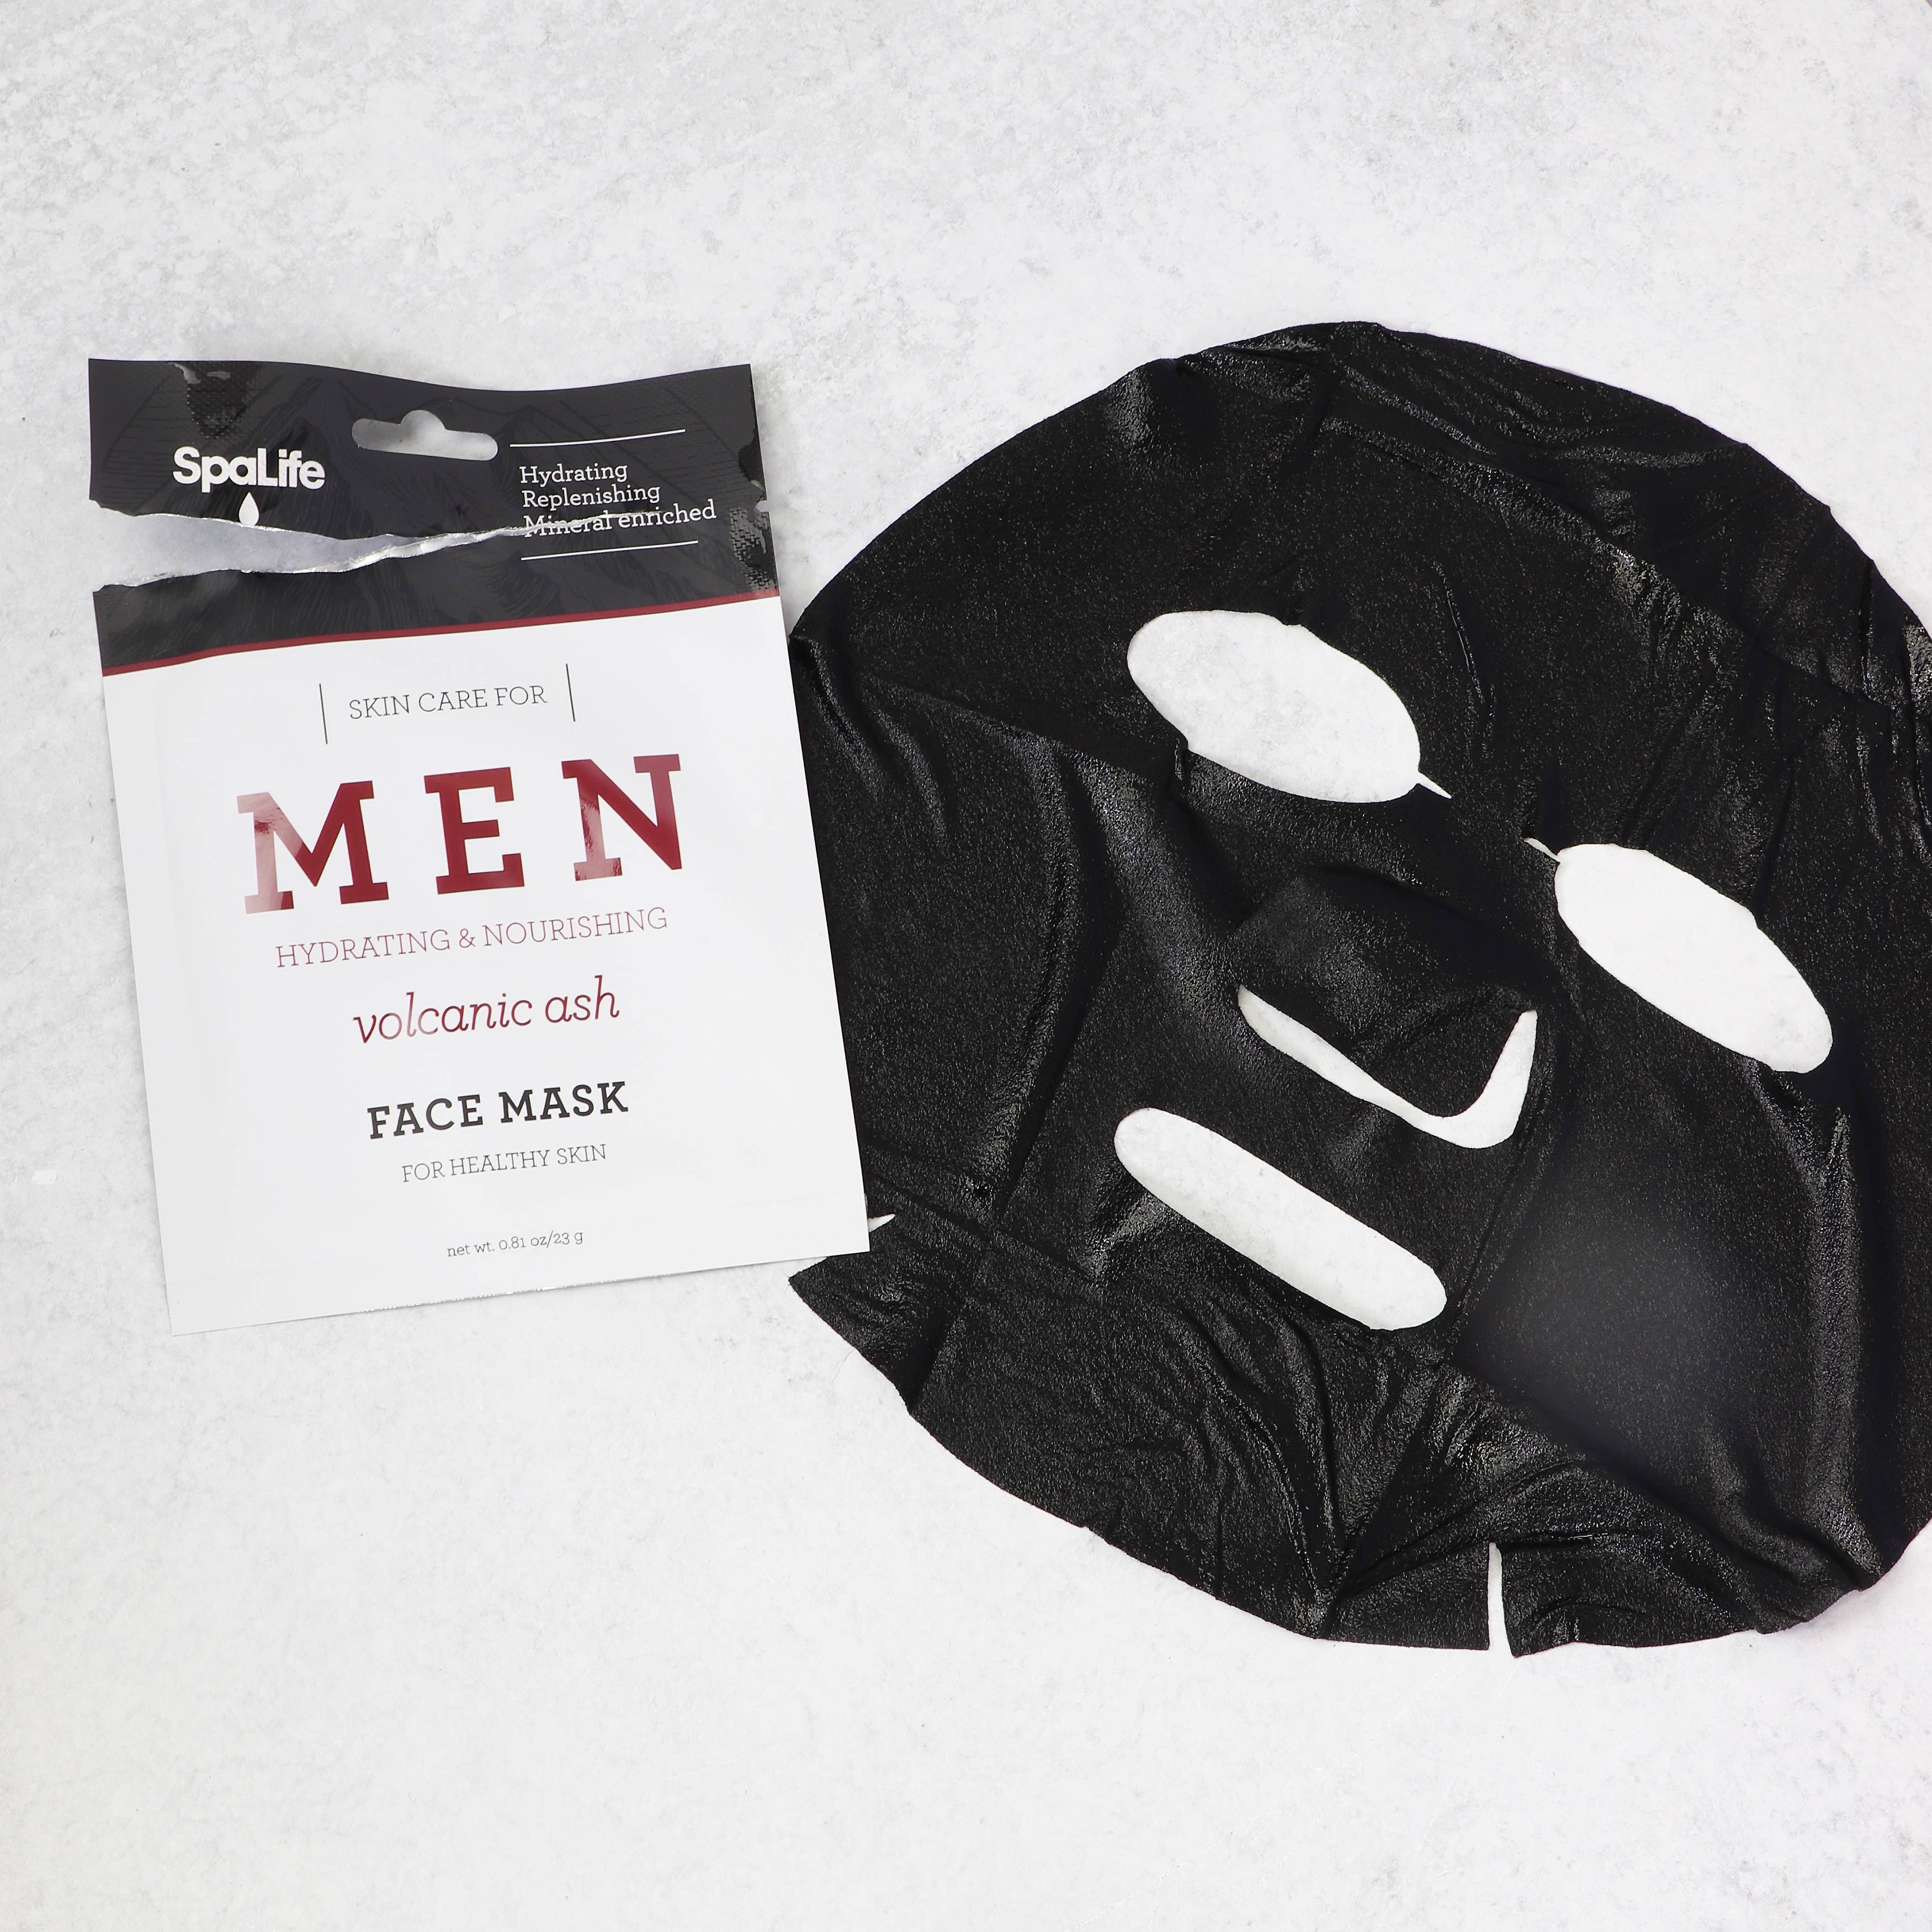 Men's Volcanic Ash Facial Mask: Single